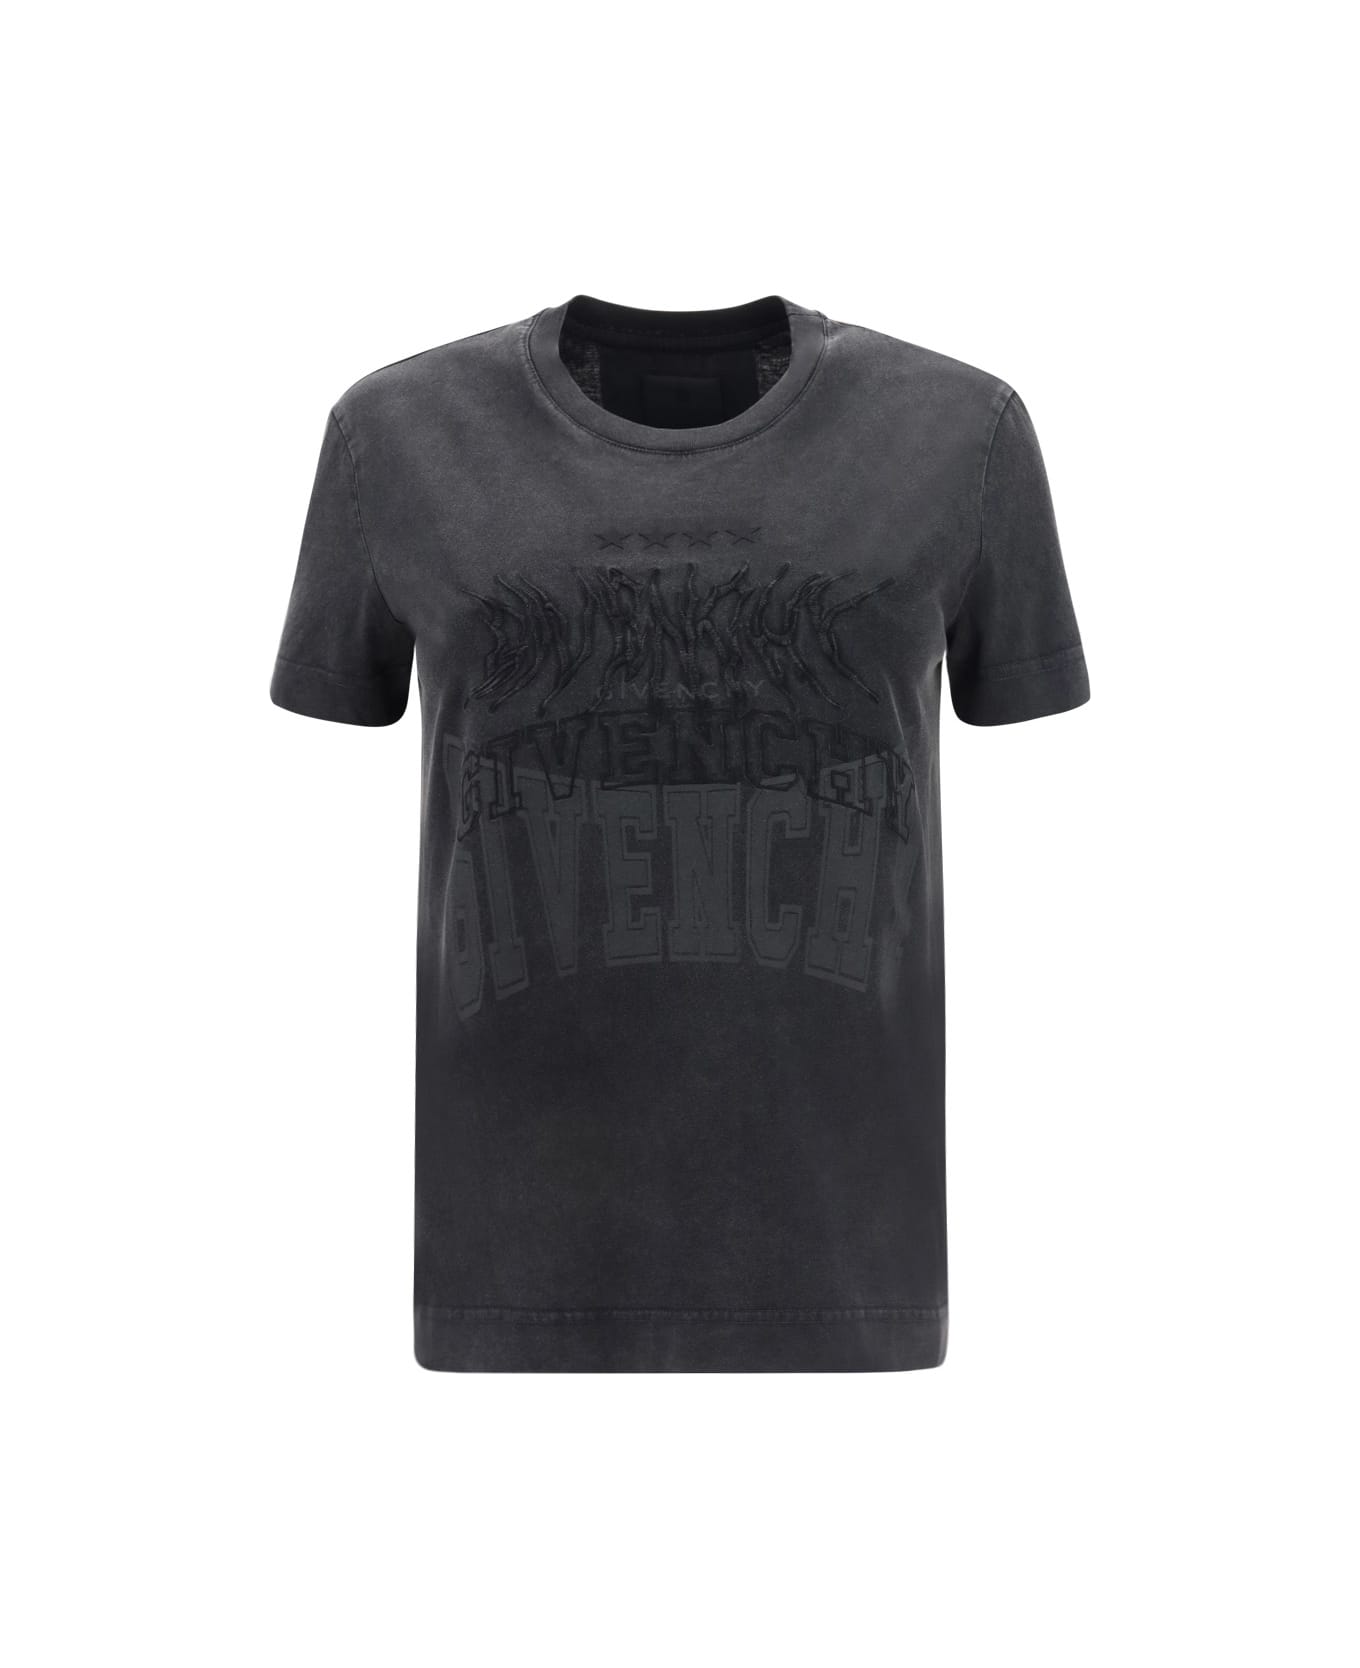 Givenchy T-shirt - Faded Black